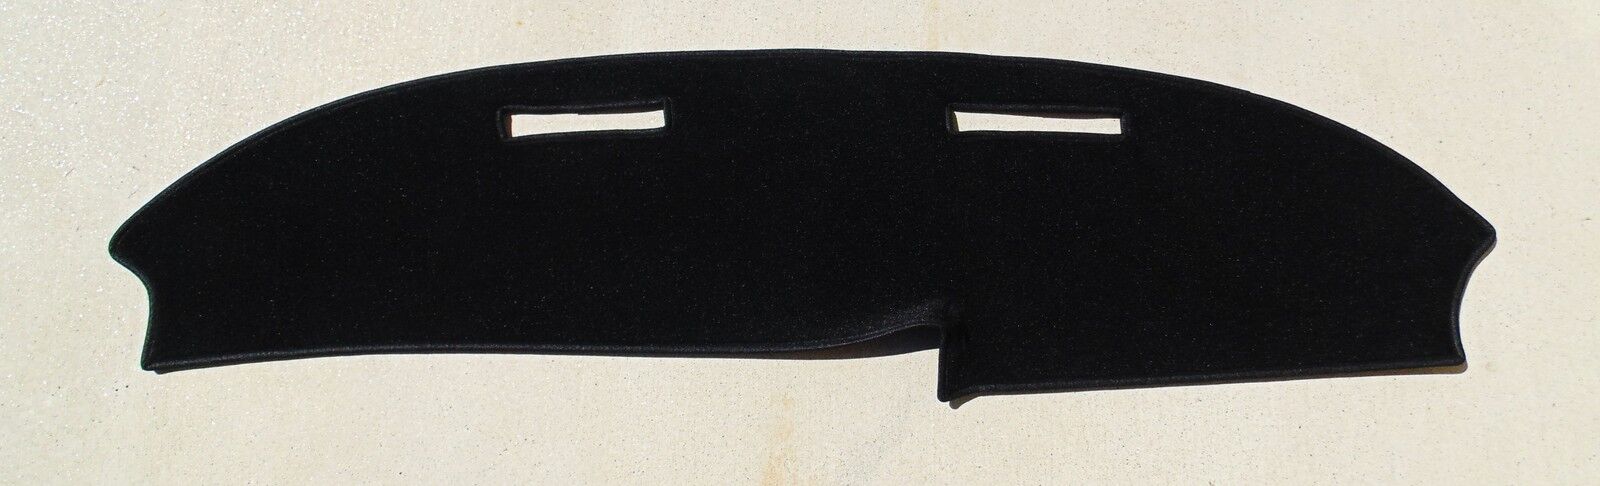 1970-1981 Pontiac Firebird dash cover mat dashboard pad black